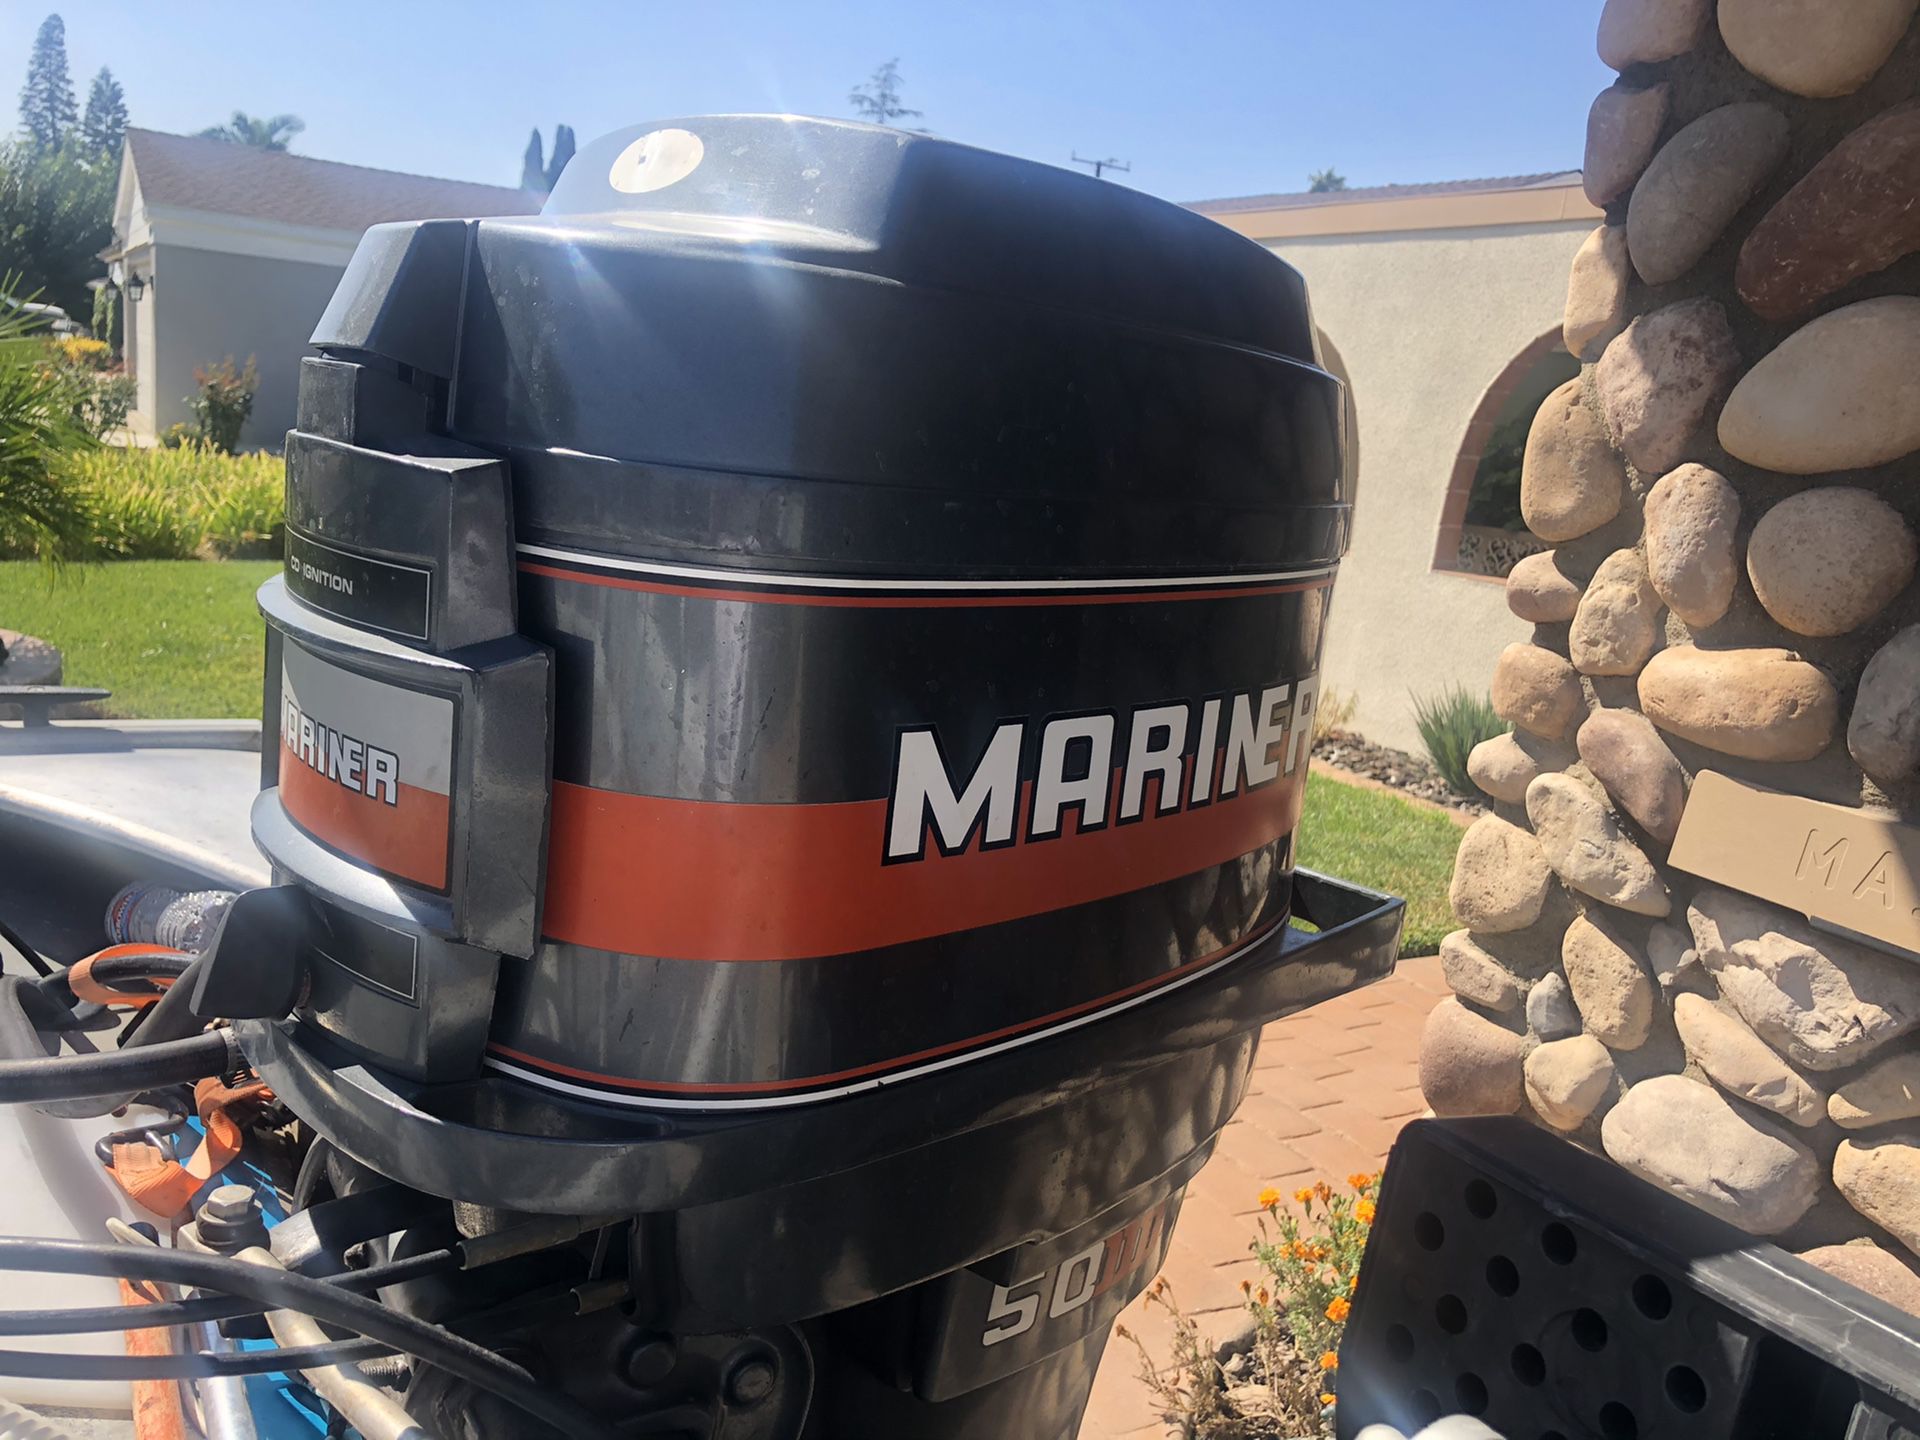 Mariner 50 hp outboard motor